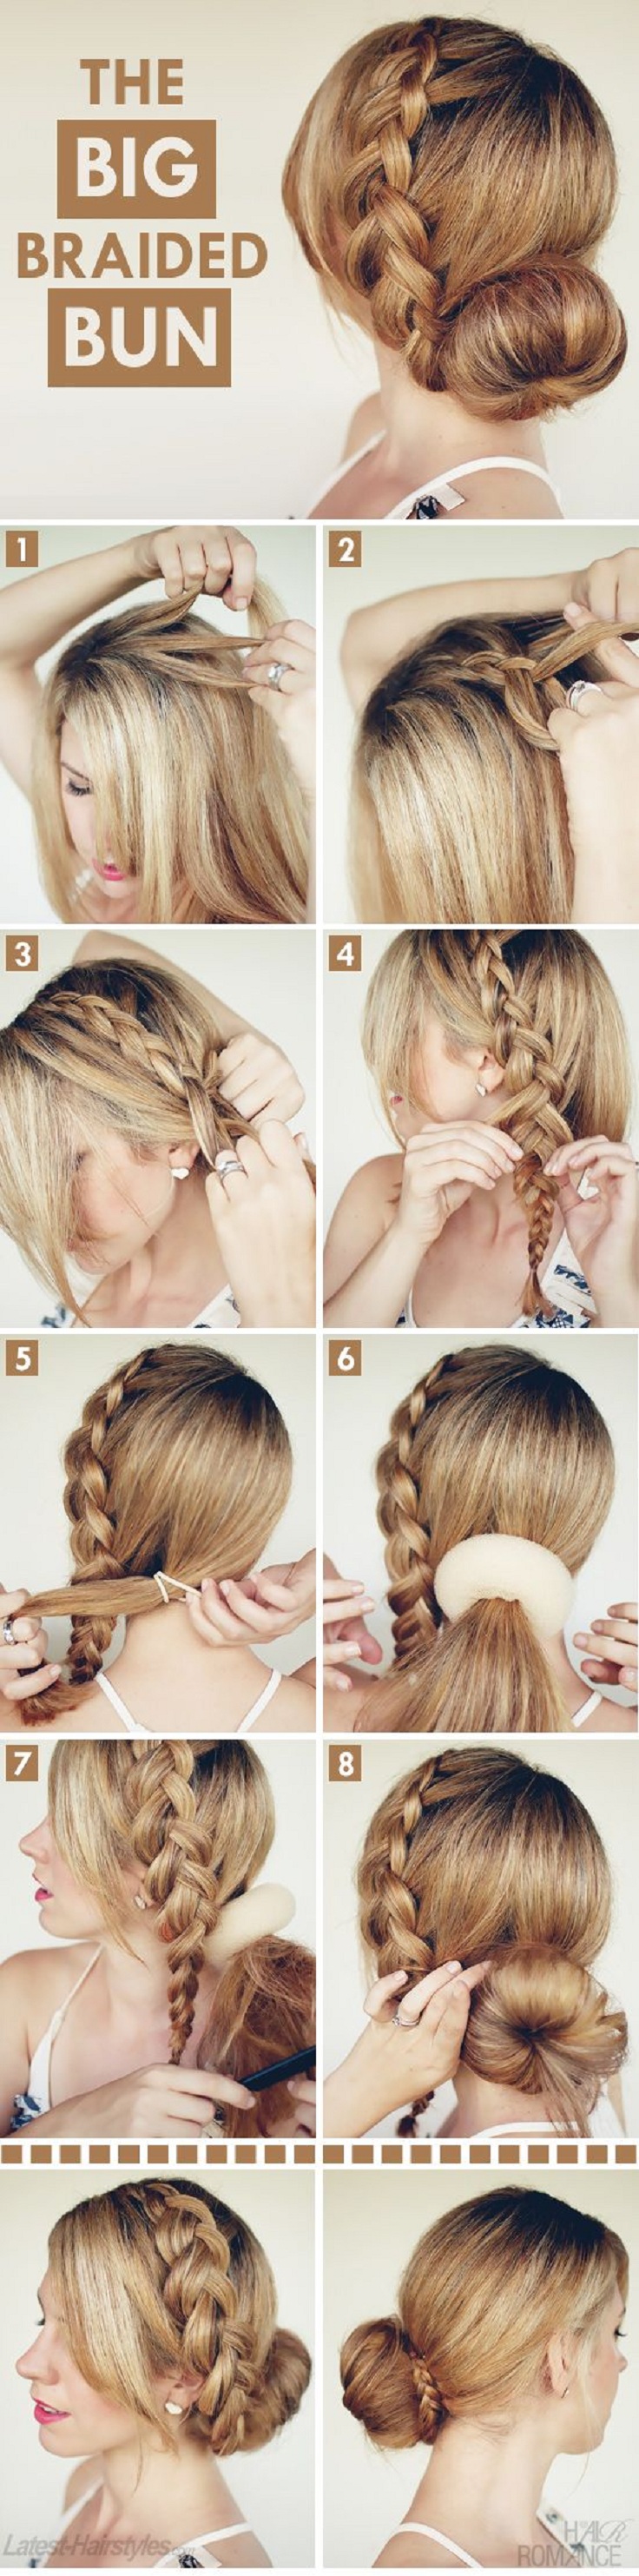 Adorable hairstyle tutorials: The big braided bun